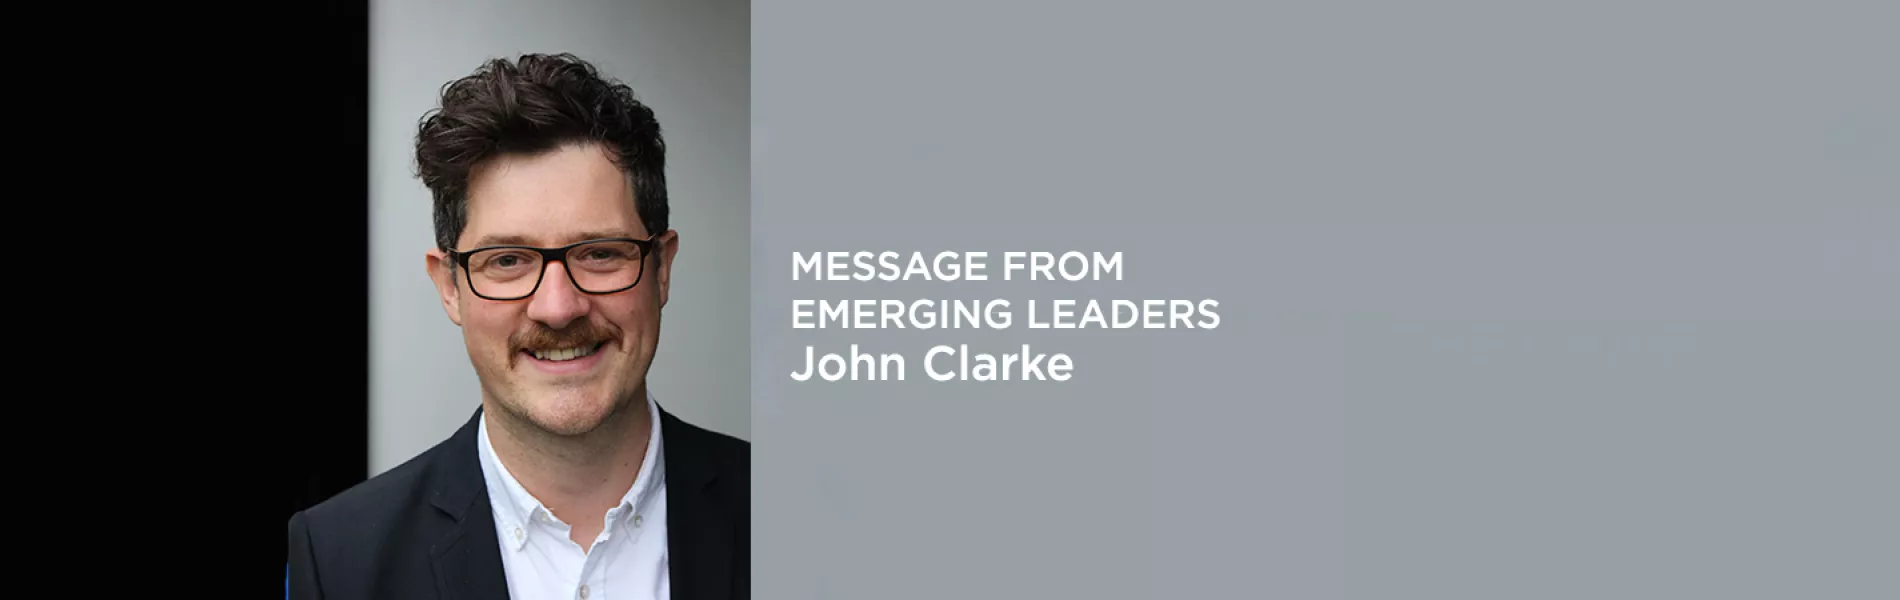 Emerging Leaders Editorial John Clarke Banner